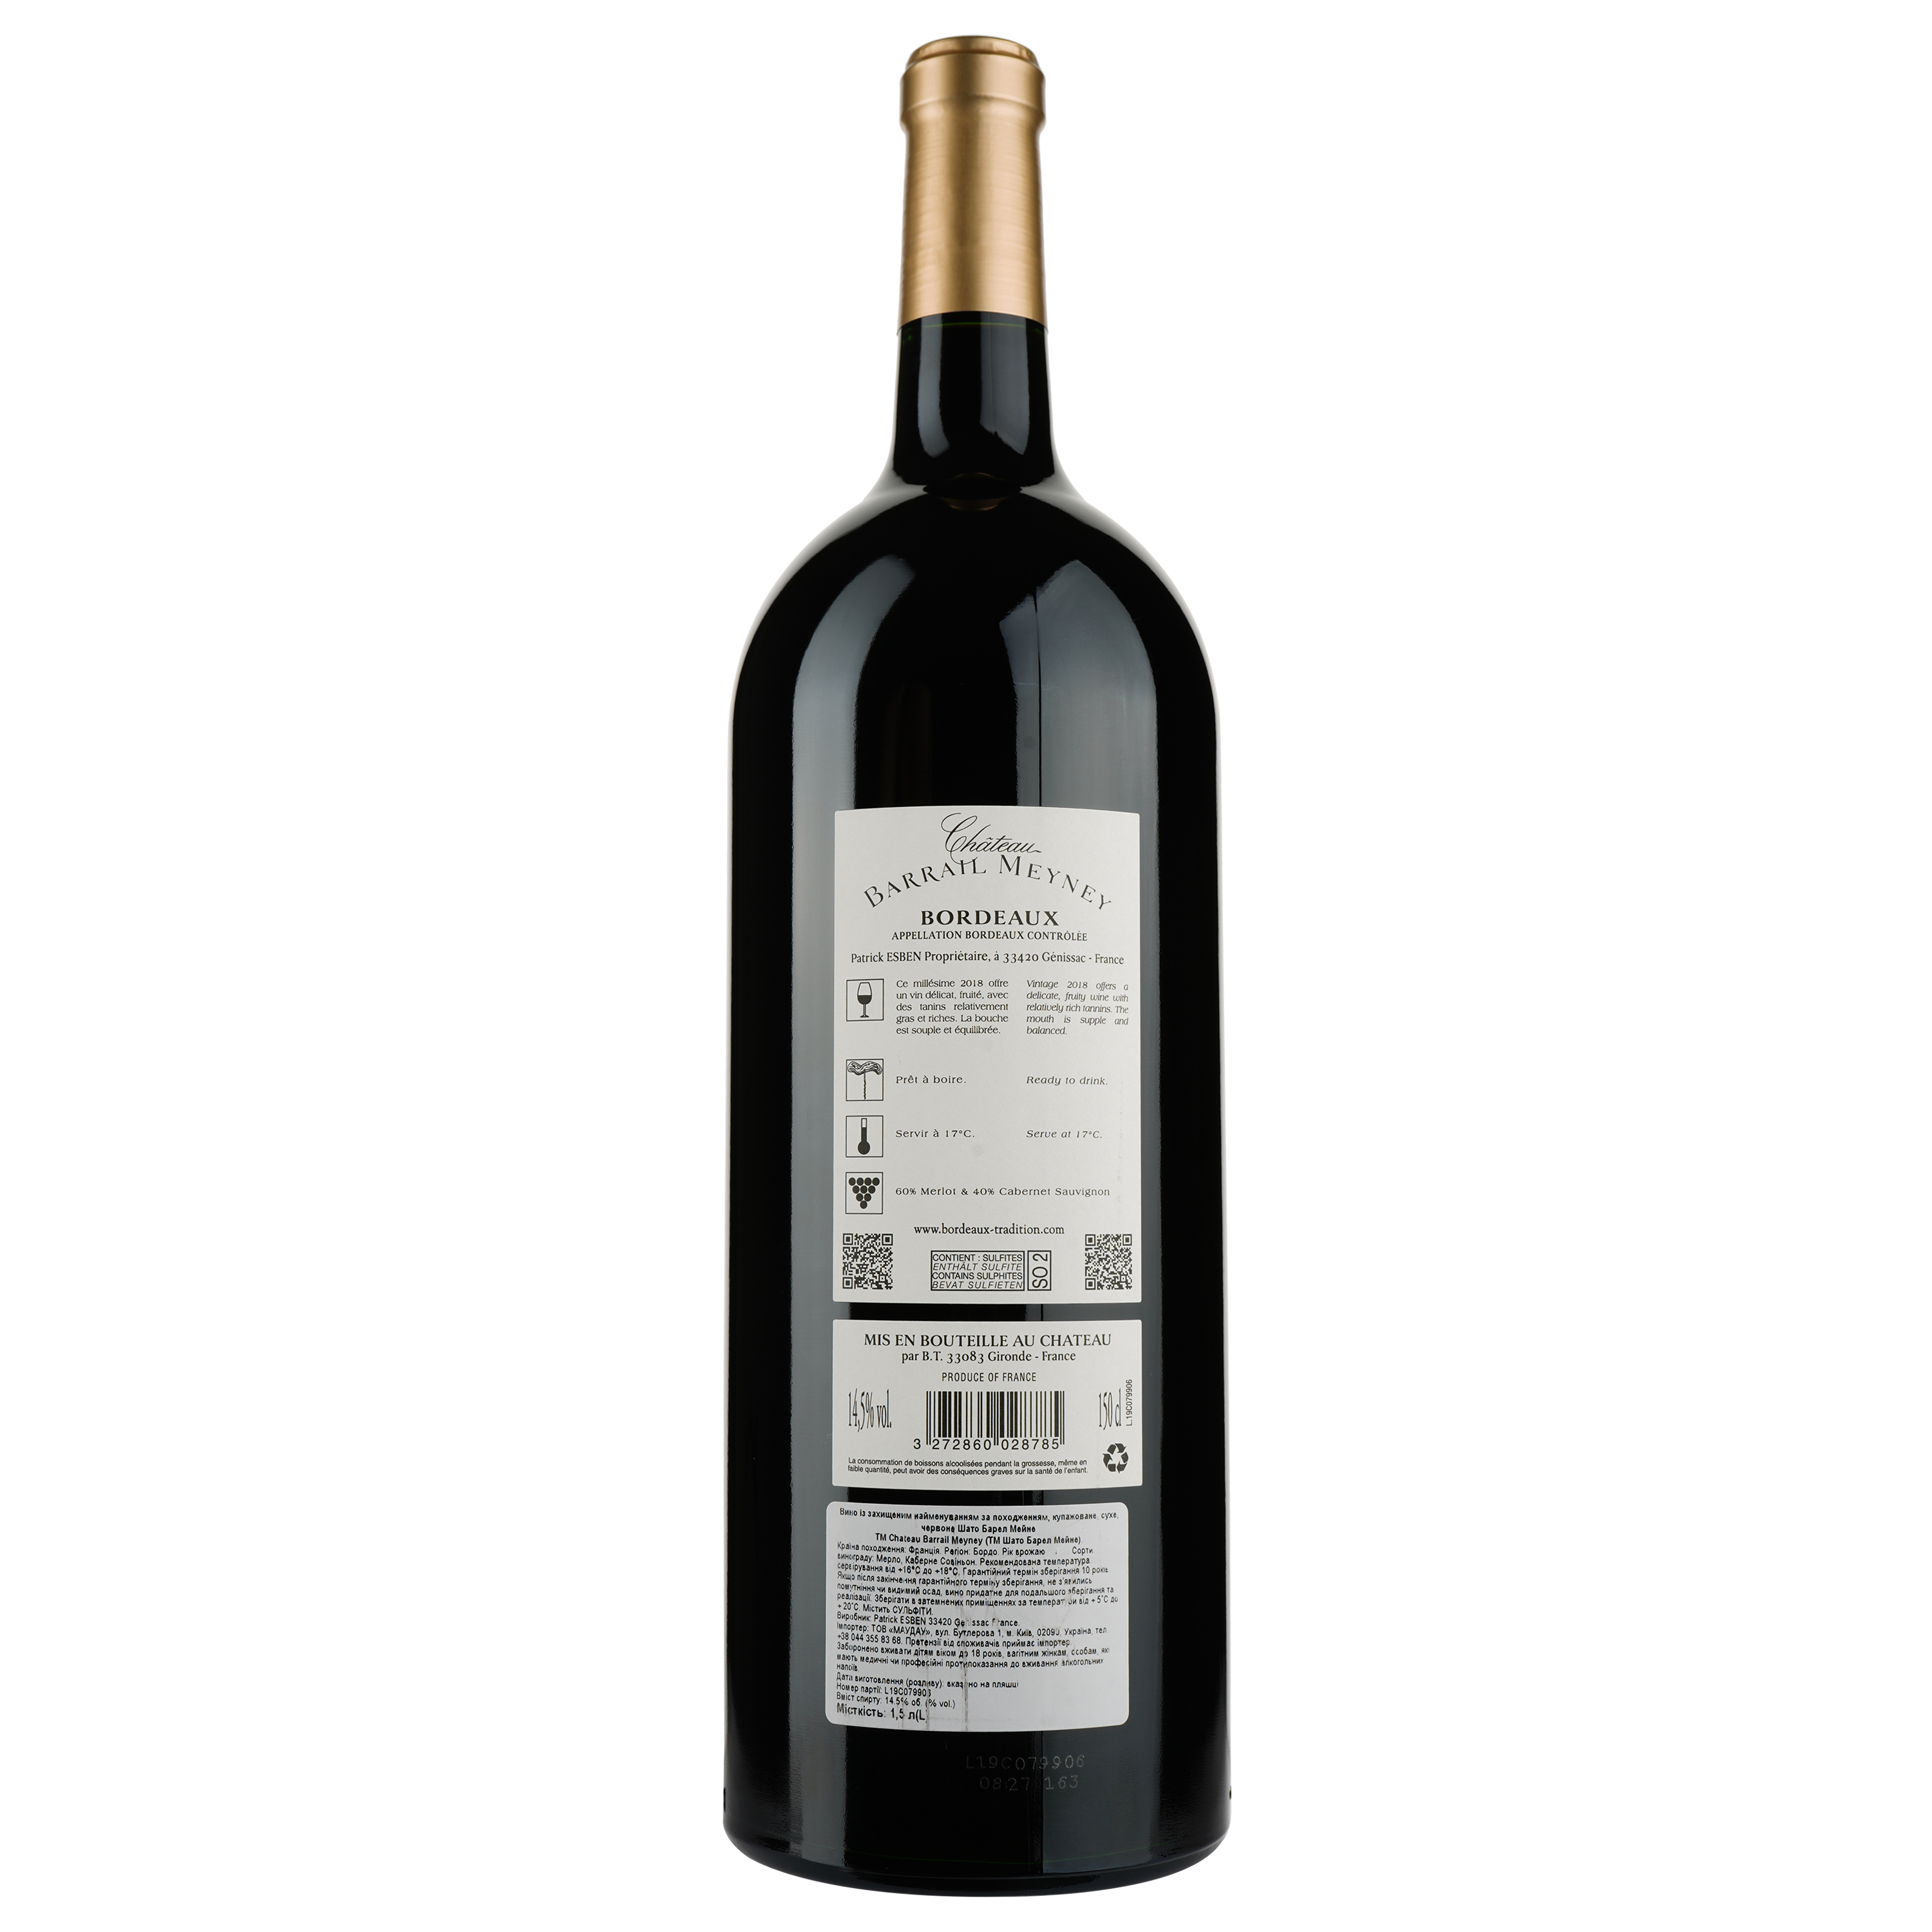 Вино Chateau Barrail Meyney AOP Bordeaux 2018, красное, сухое, 1,5 л - фото 2